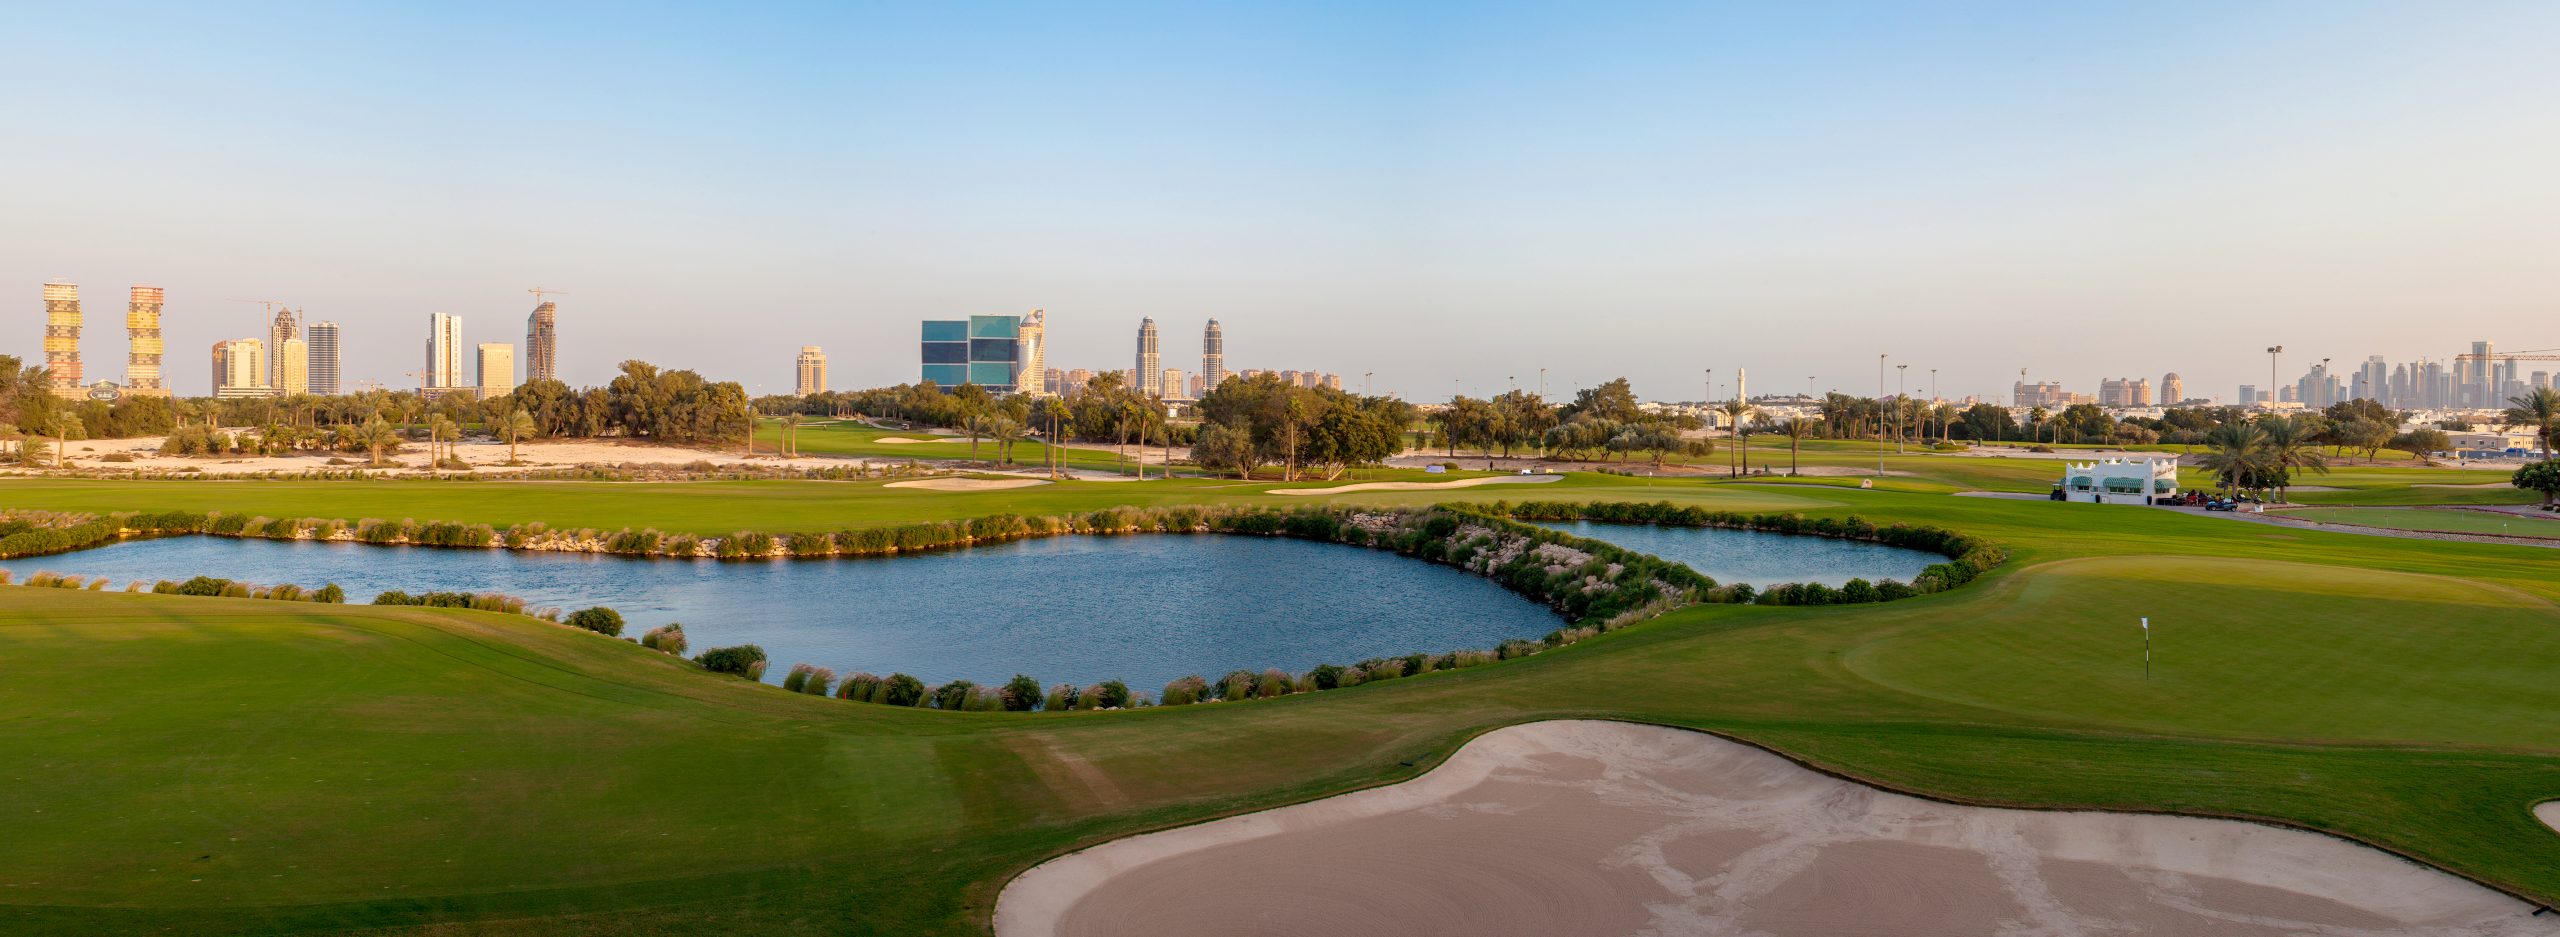 CNN: Doha Golf Club; A green oasis in the heart of Doha